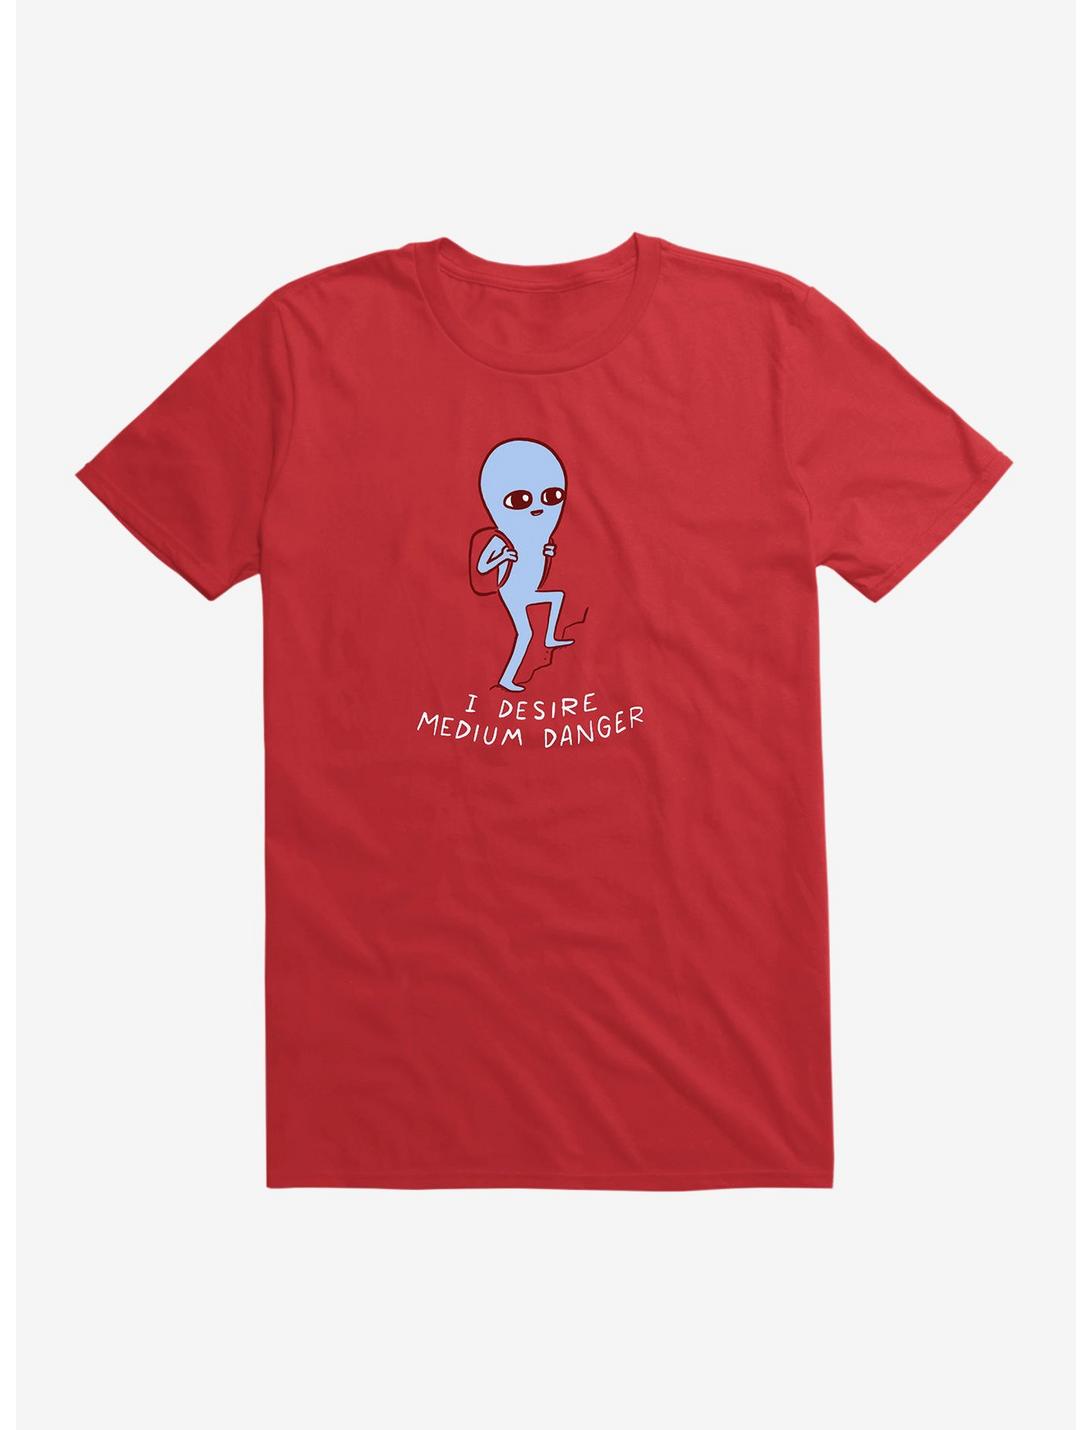 Strange Planet Medium Danger T-Shirt, RED, hi-res